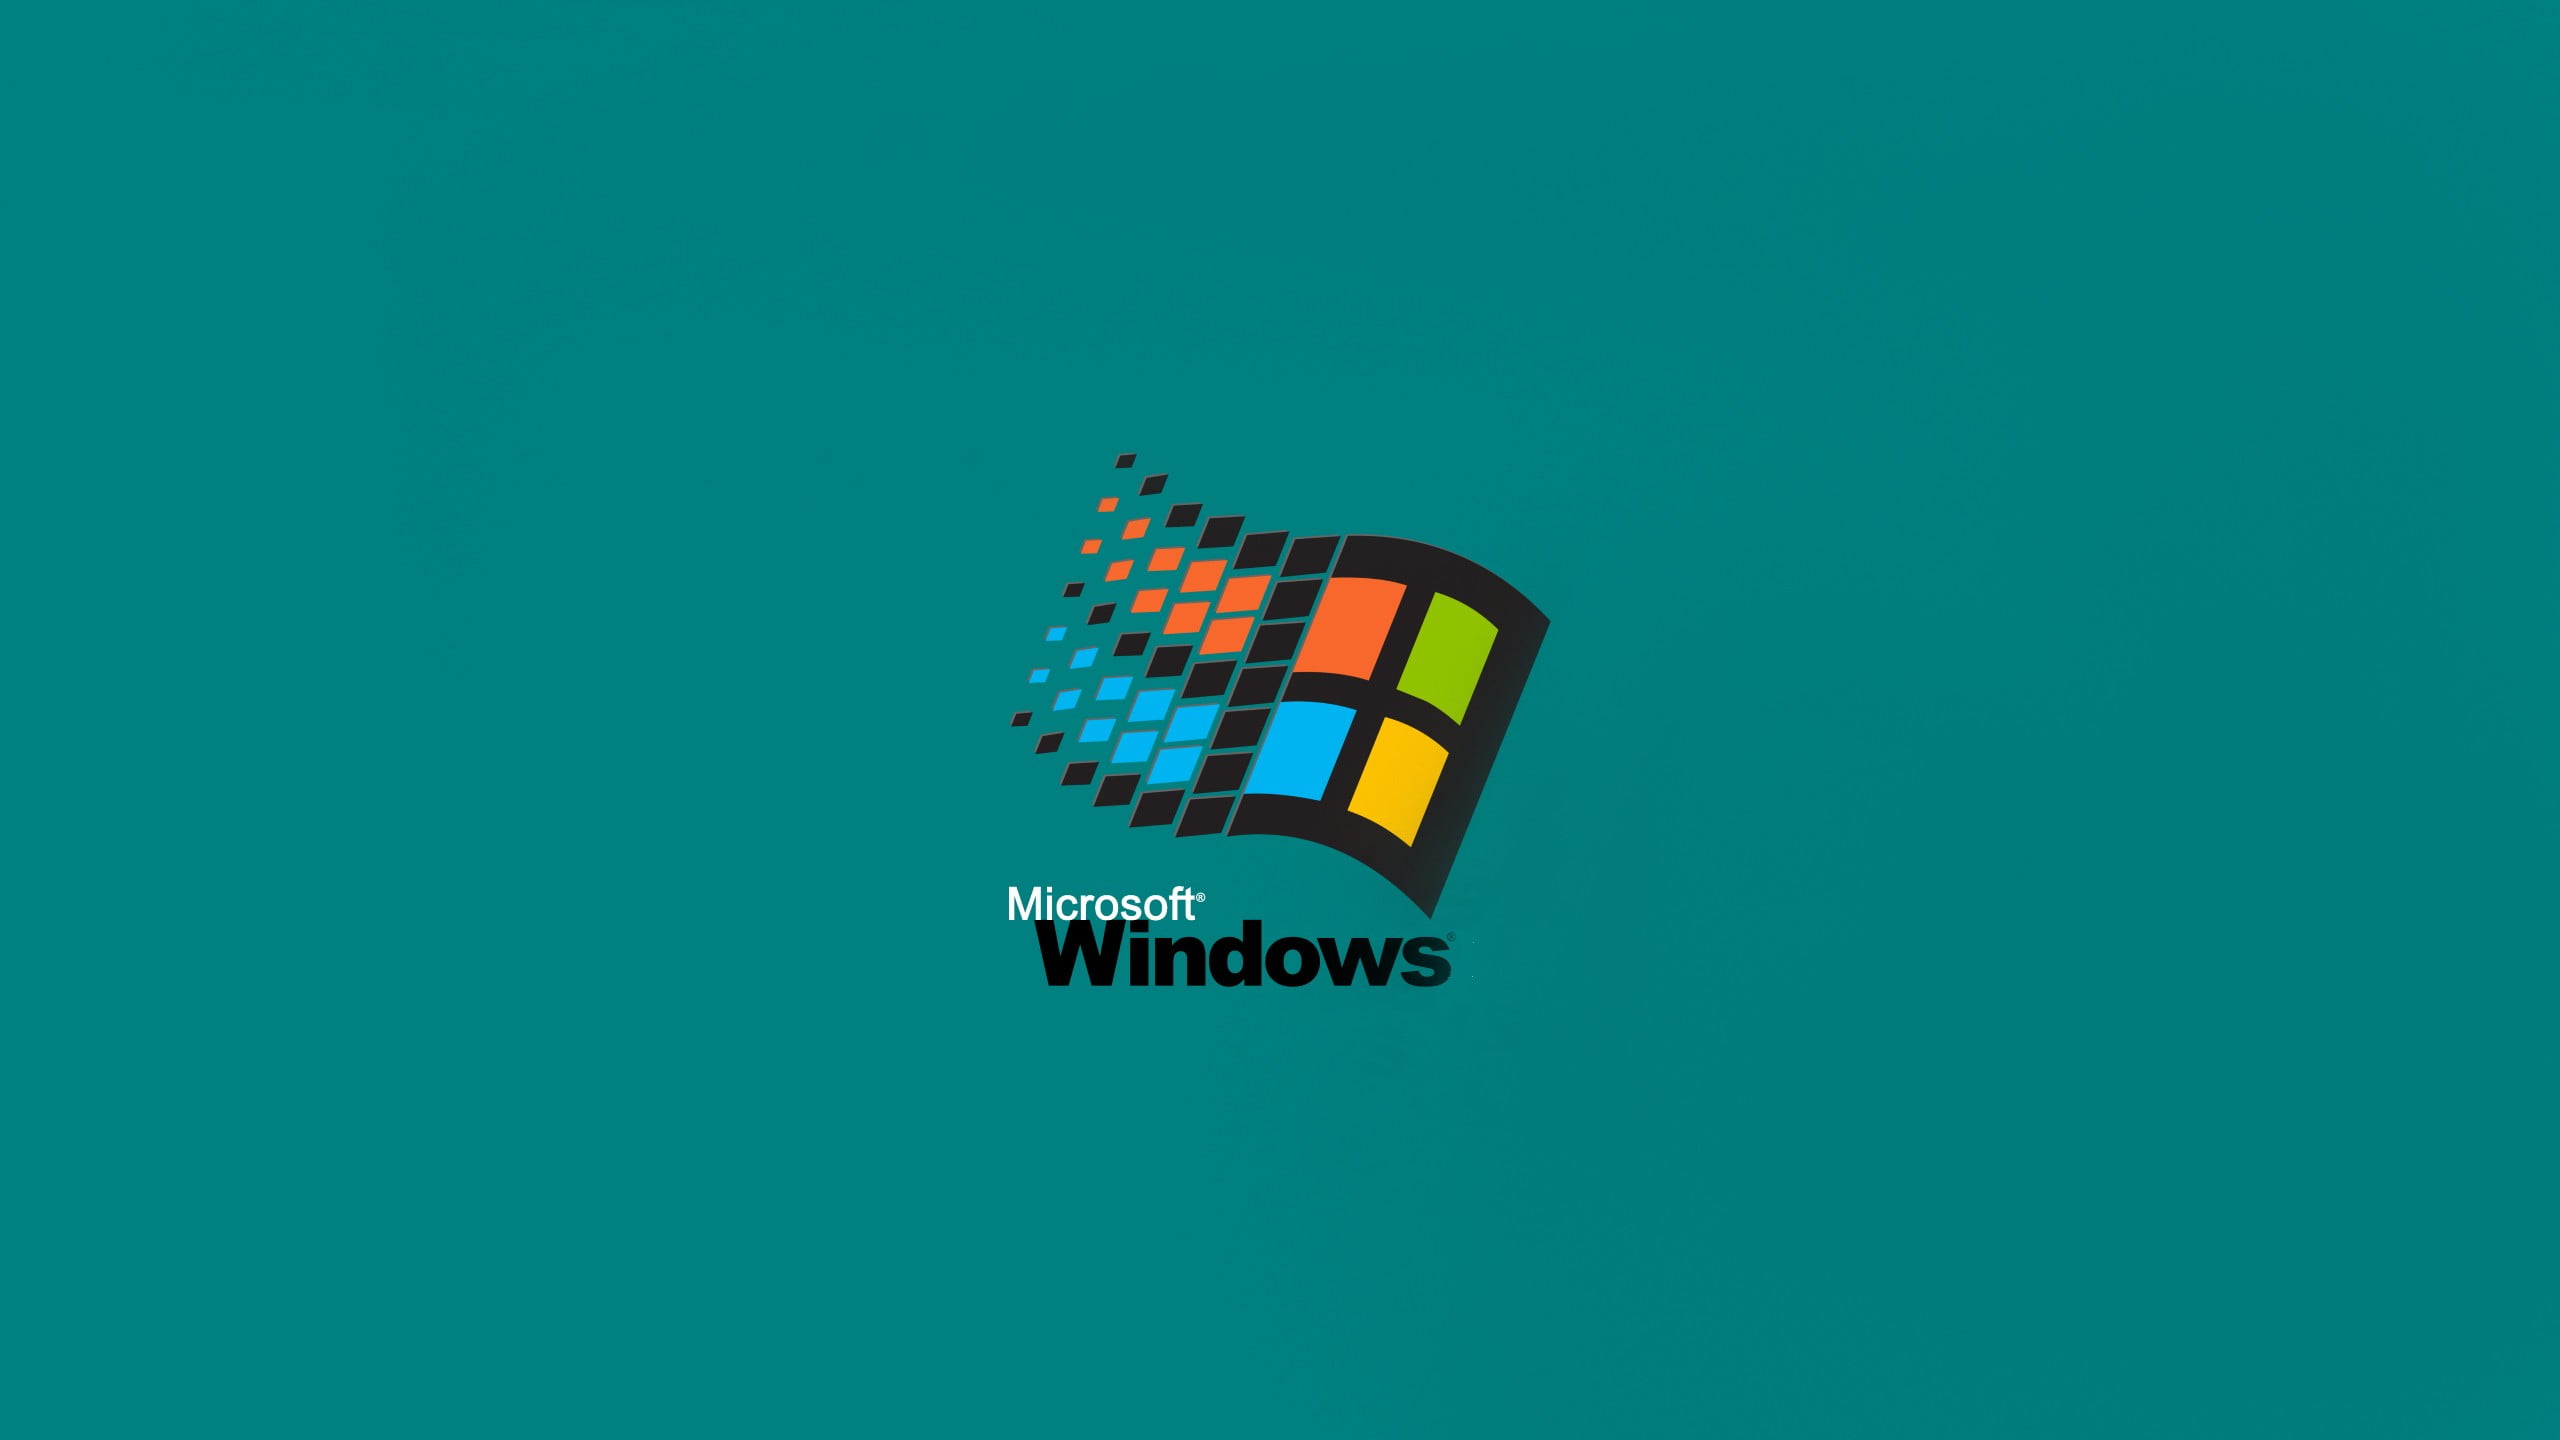 Microsoft Windows 95 logo, copy space, no people, text, blue